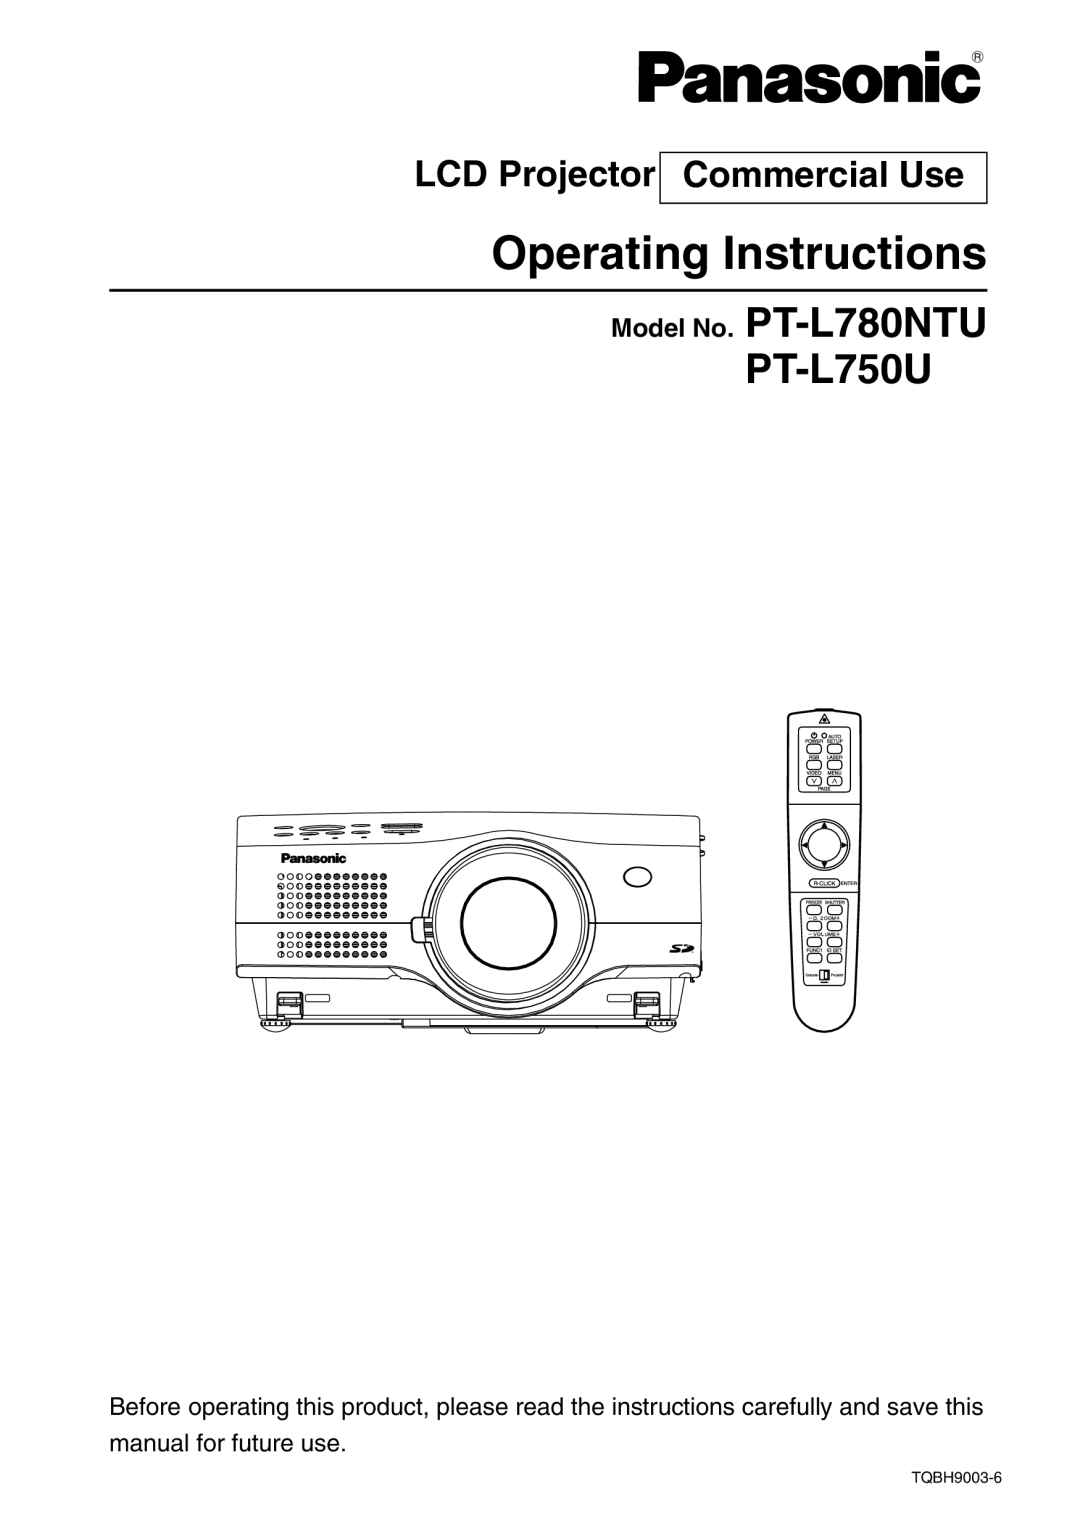 Panasonic PT-L750U R, TQBH9003-6 manual Operating Instructions, LCD Projector Commercial Use, Model No. PT-L780NTU 